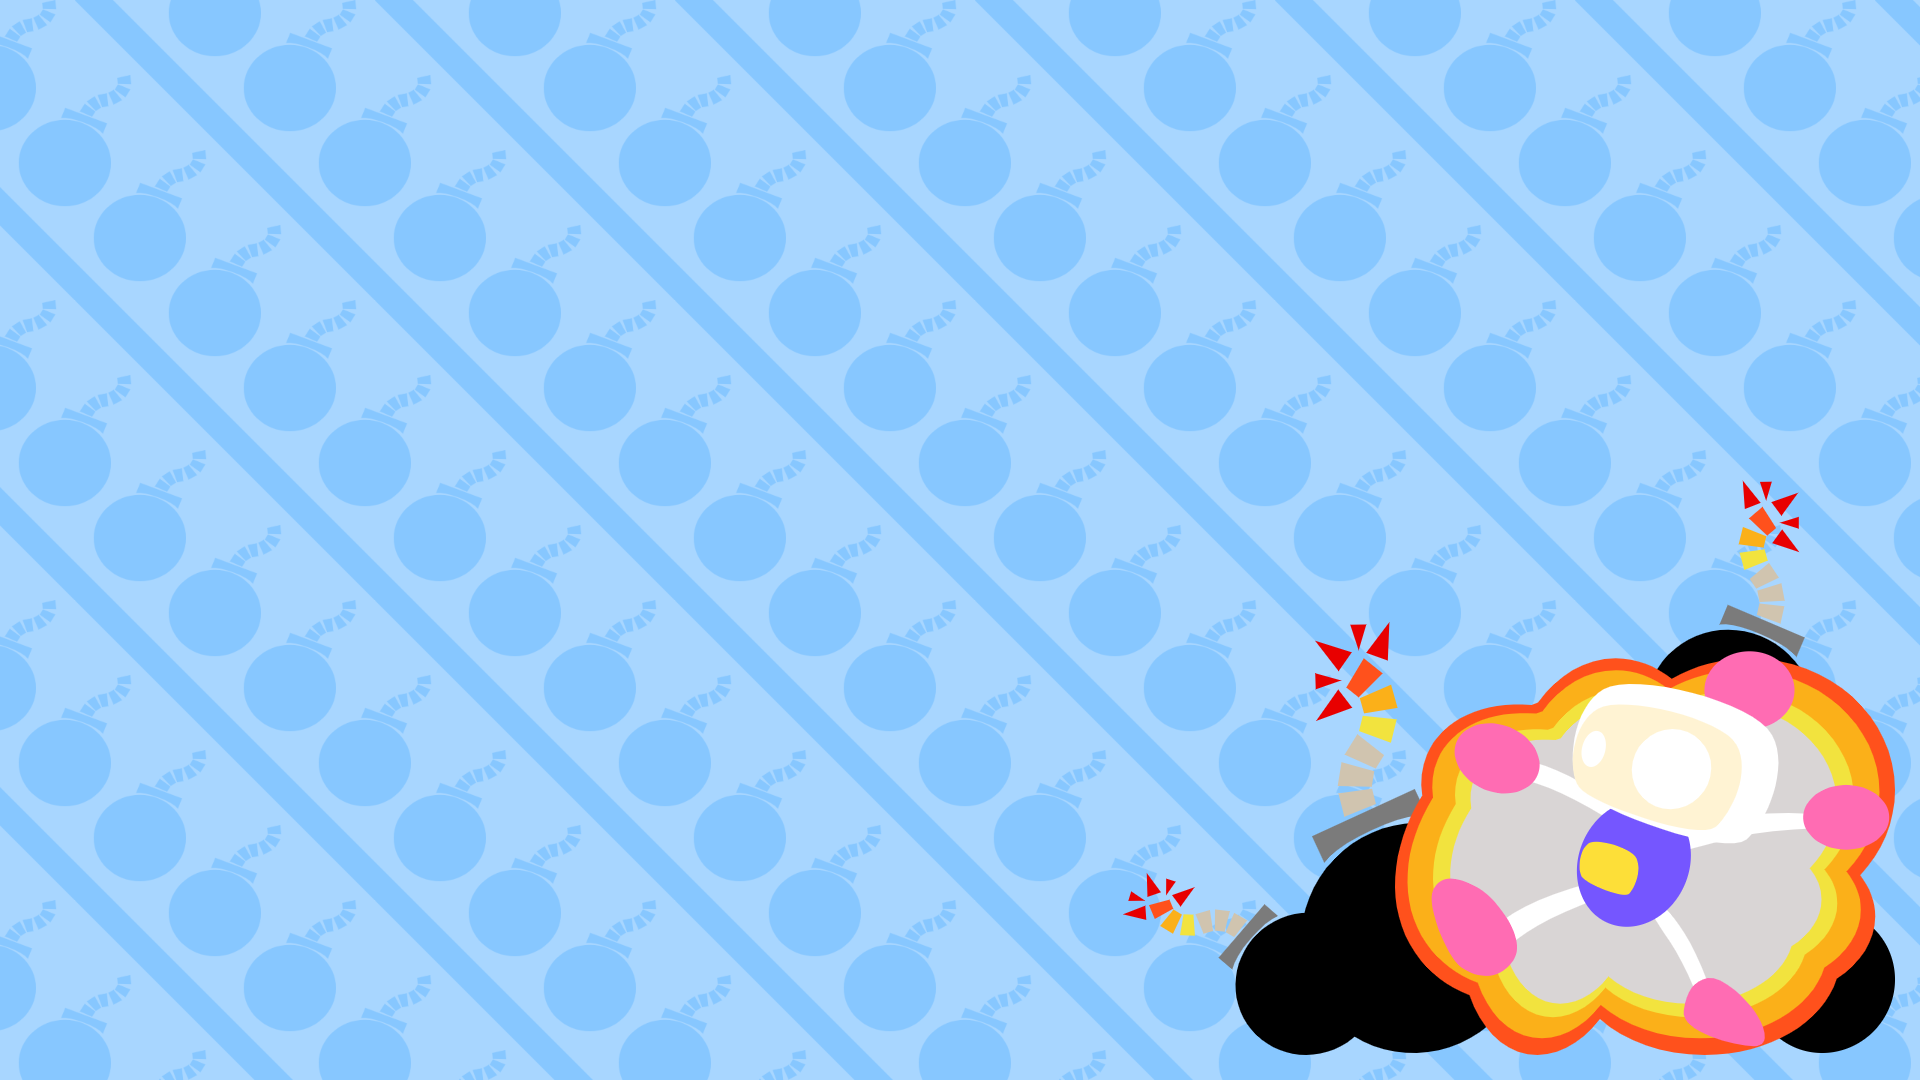 Bomberman wallpaper by pbsnapple on